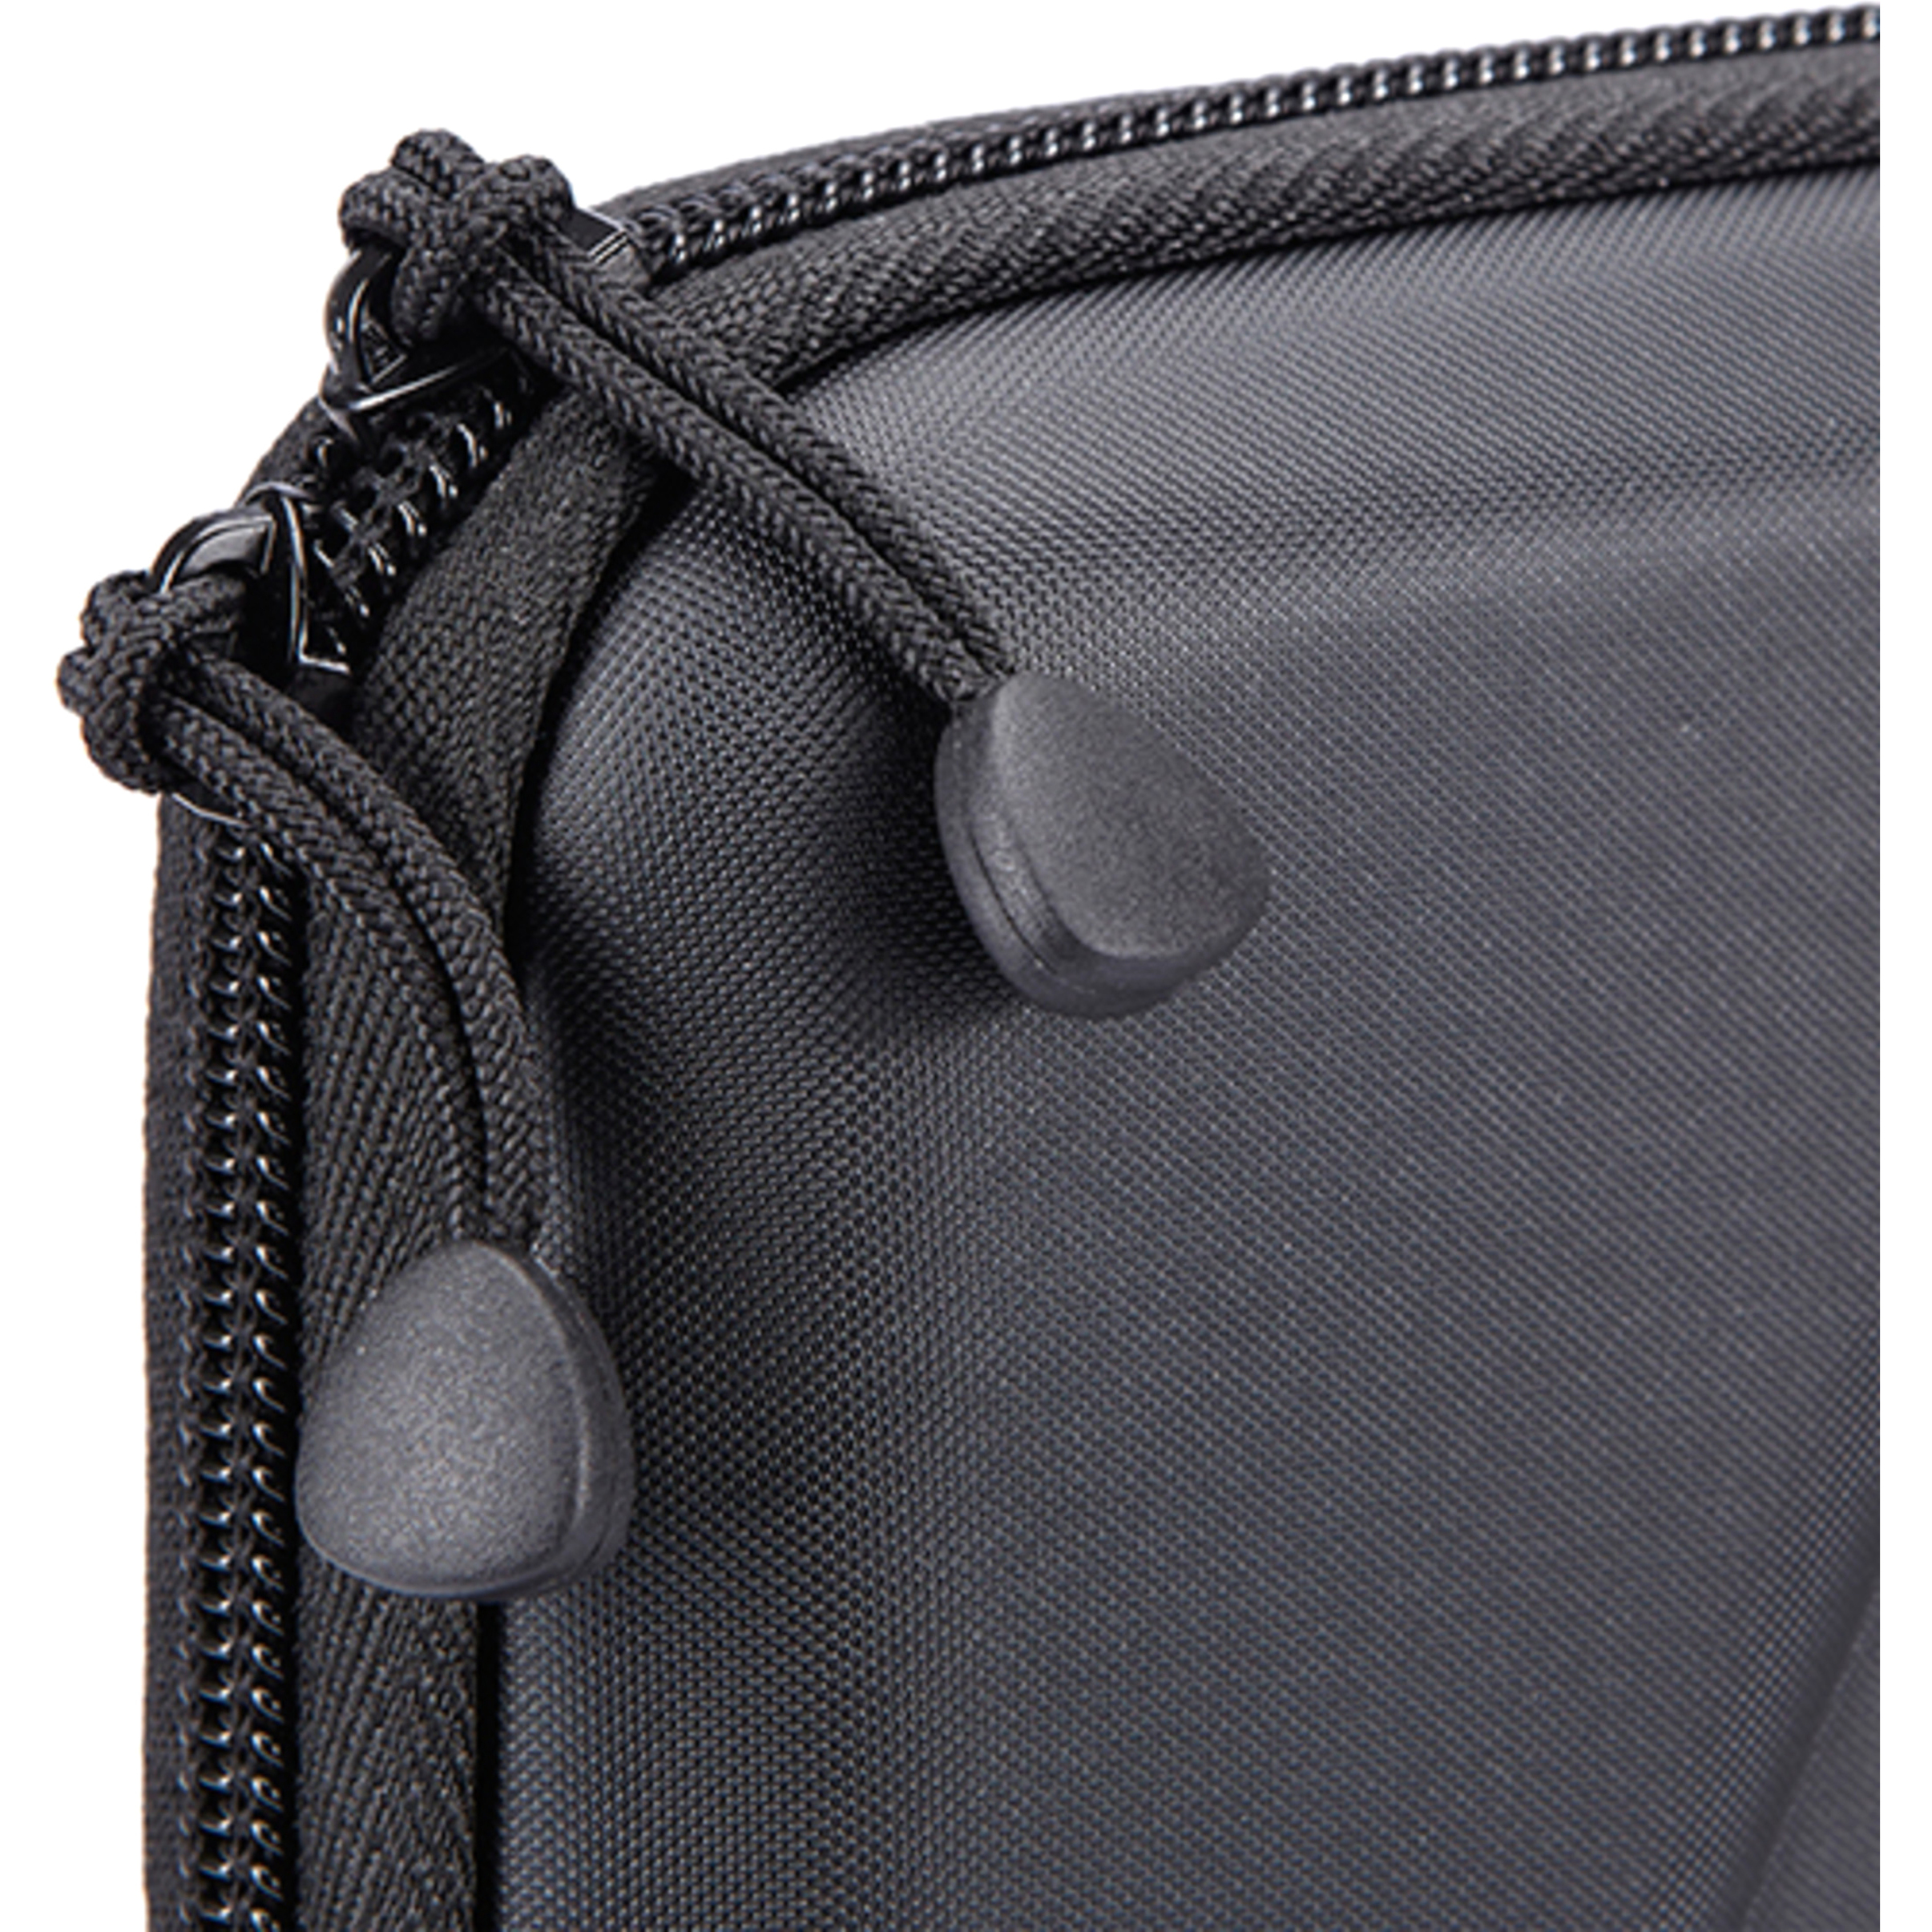 Case Logic 13" EVA MacBook Sleeve, Black - image 5 of 9